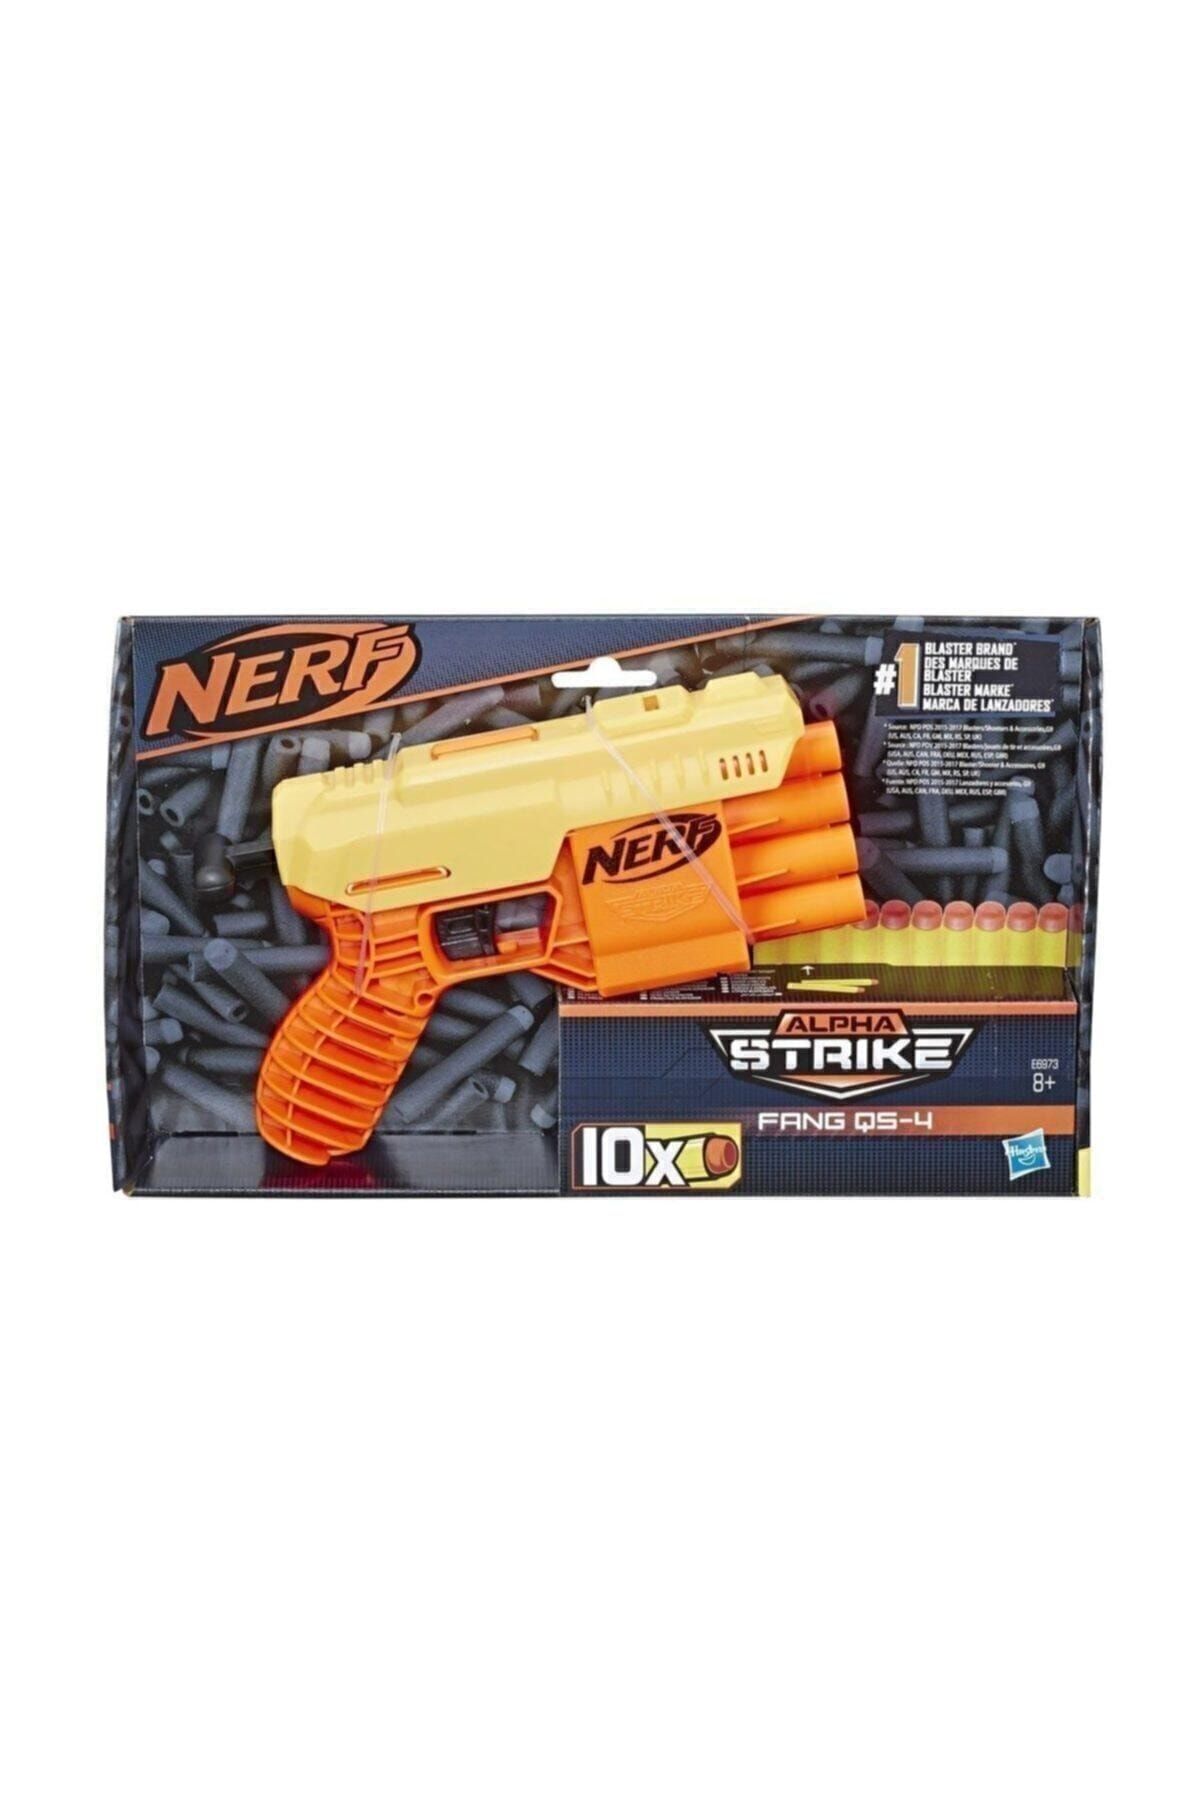 Nerf Orange Alpha Strike Fang Qs 4 Blaster 010101INTE6973